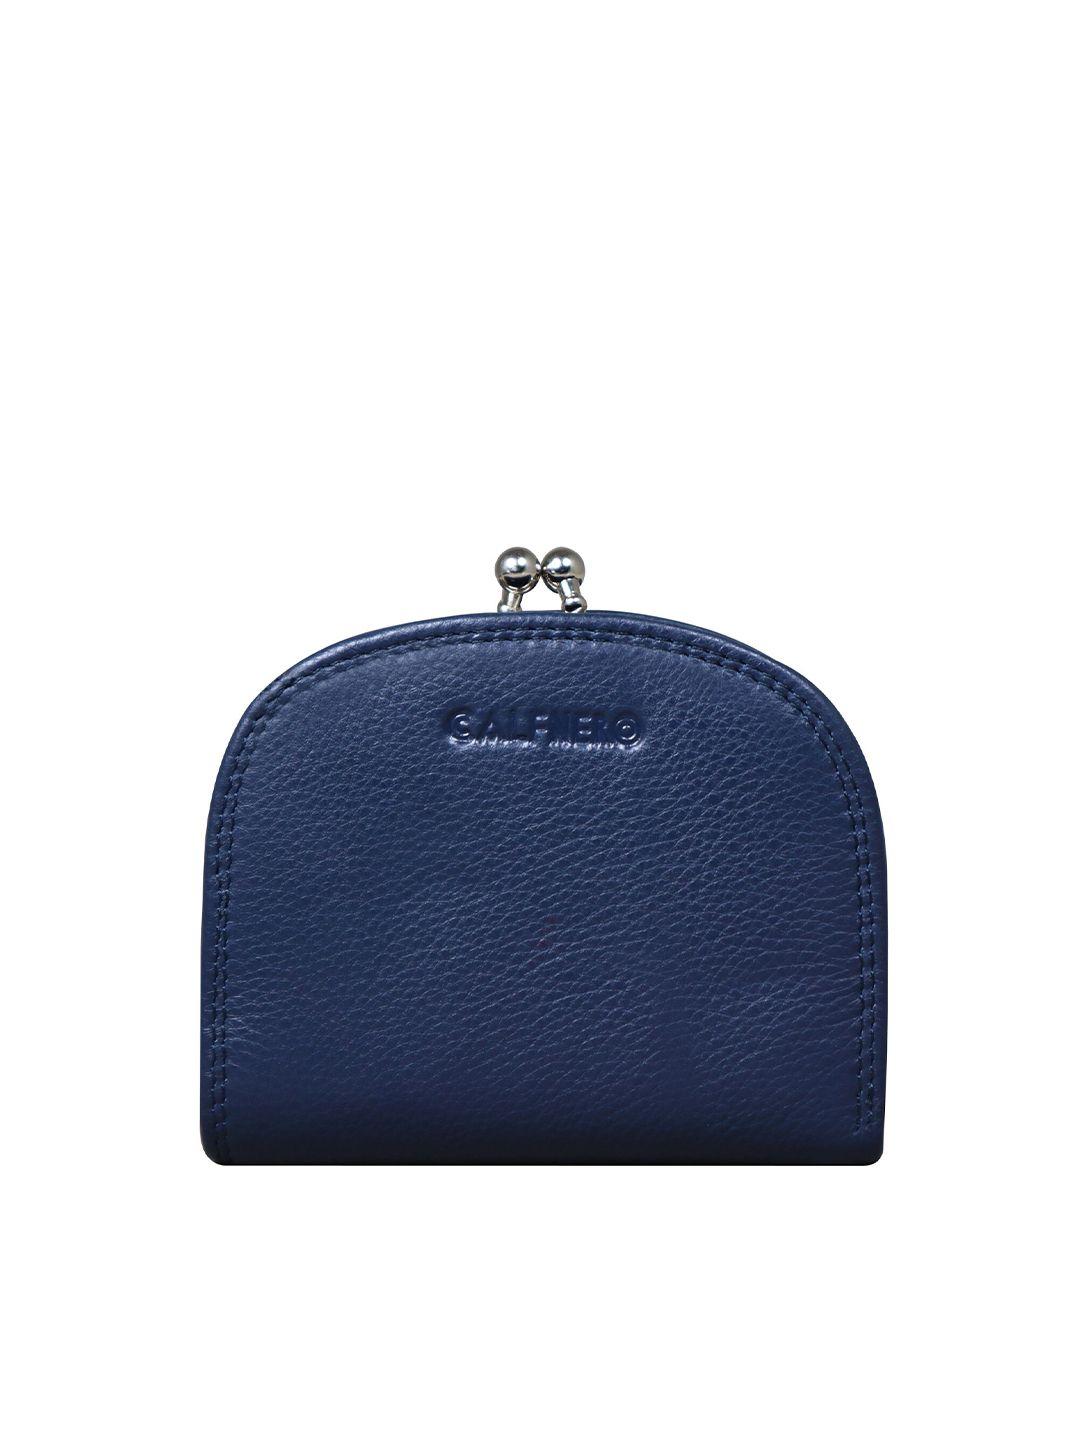 calfnero women leather purse clutch